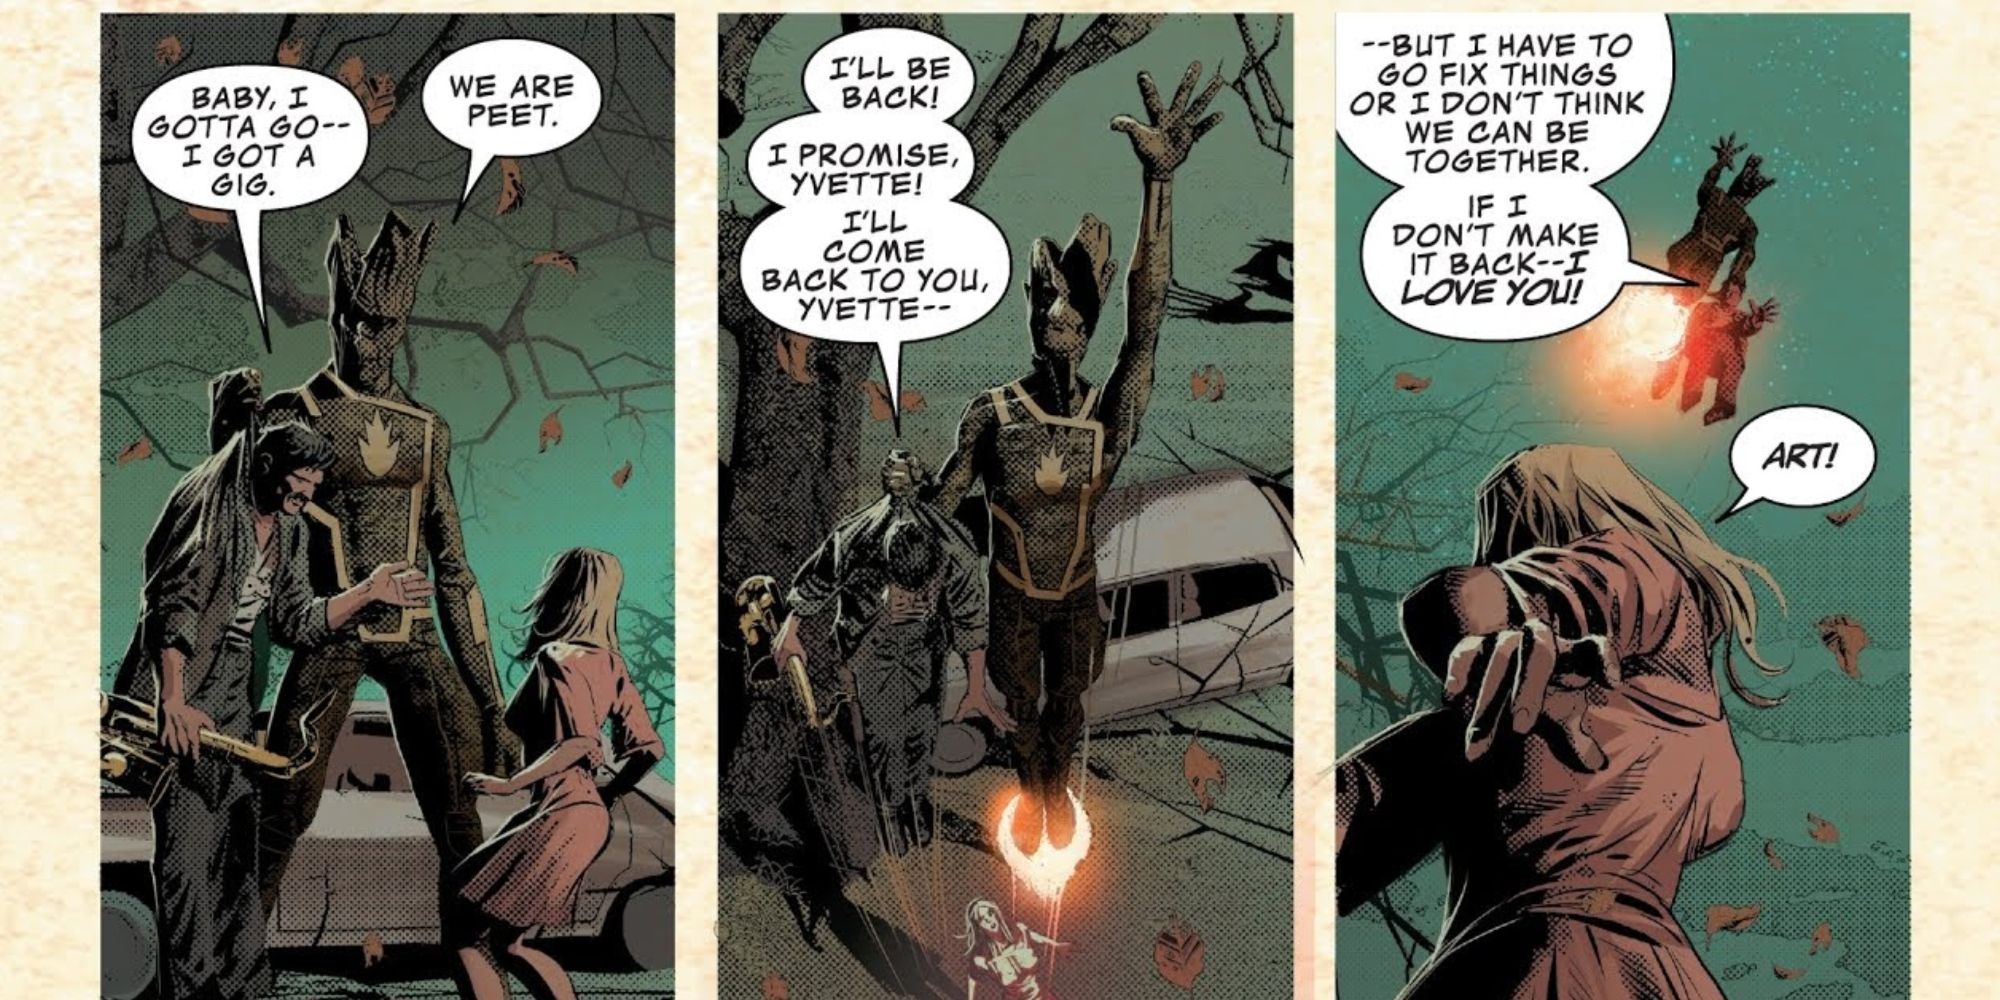 Peet se revela em Infinity Wars #5.